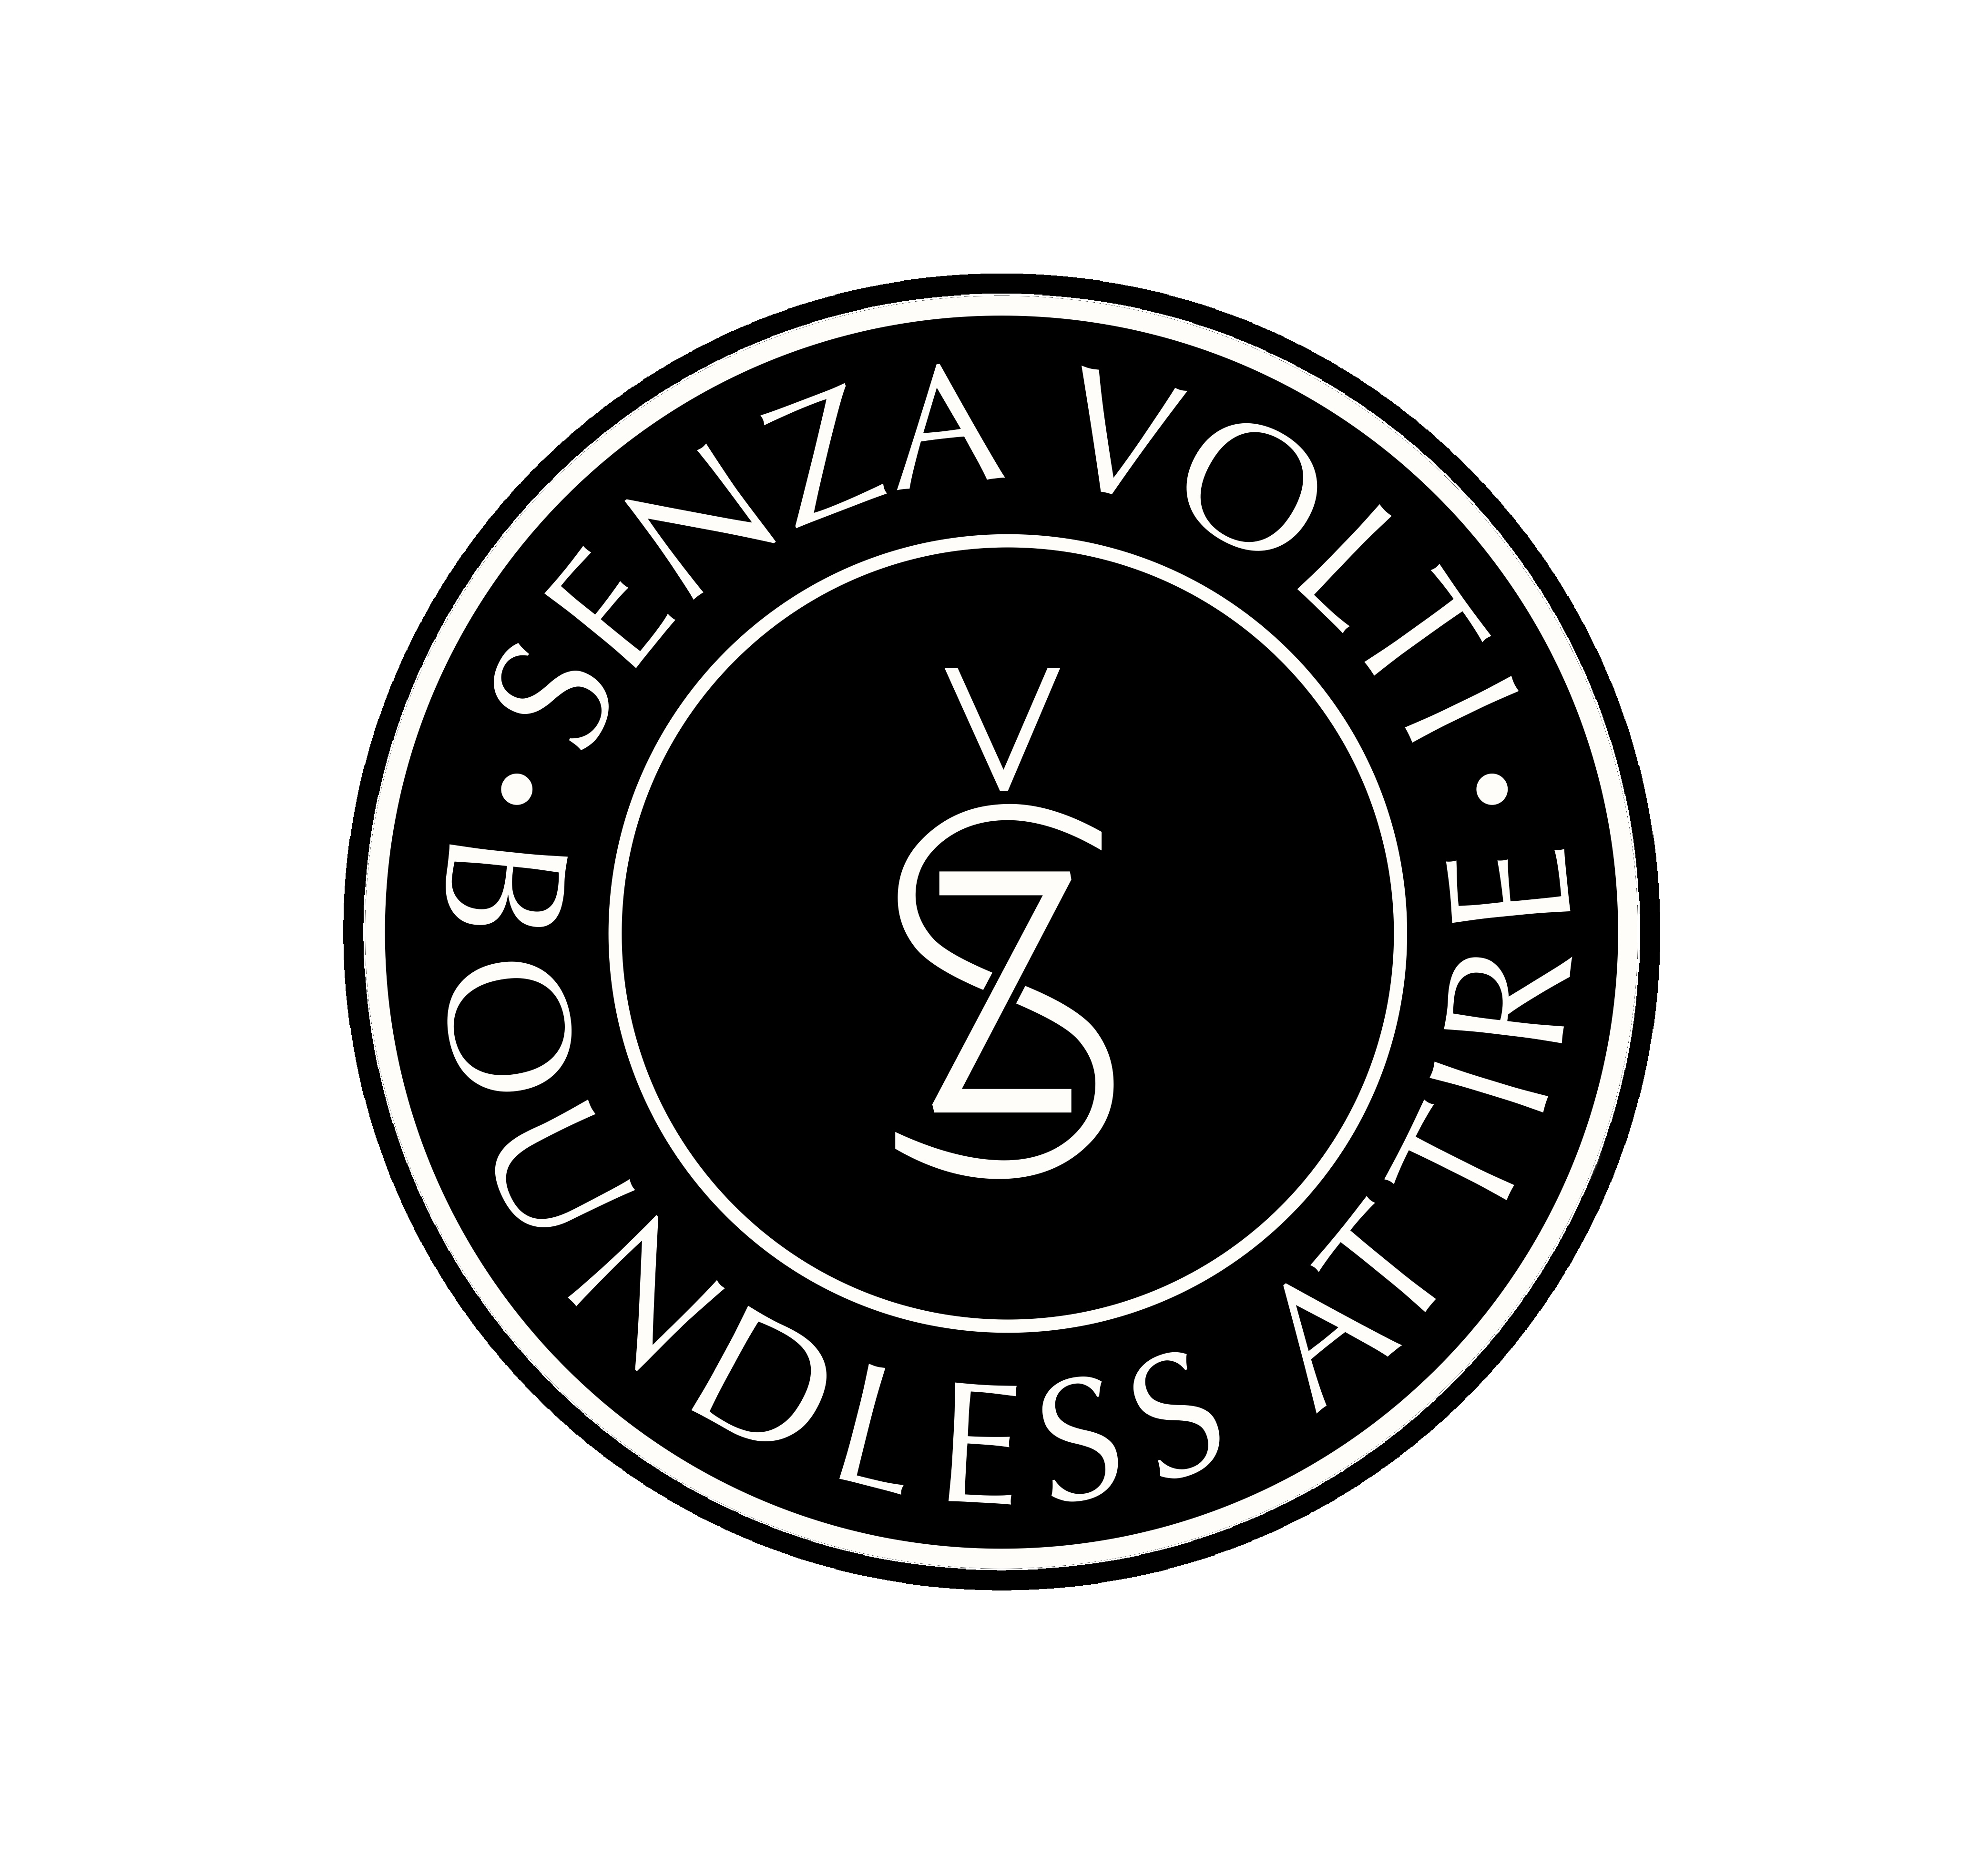 Senza Volti - Buy Affordable Second Hand Designer Clothing – SenzaVolti